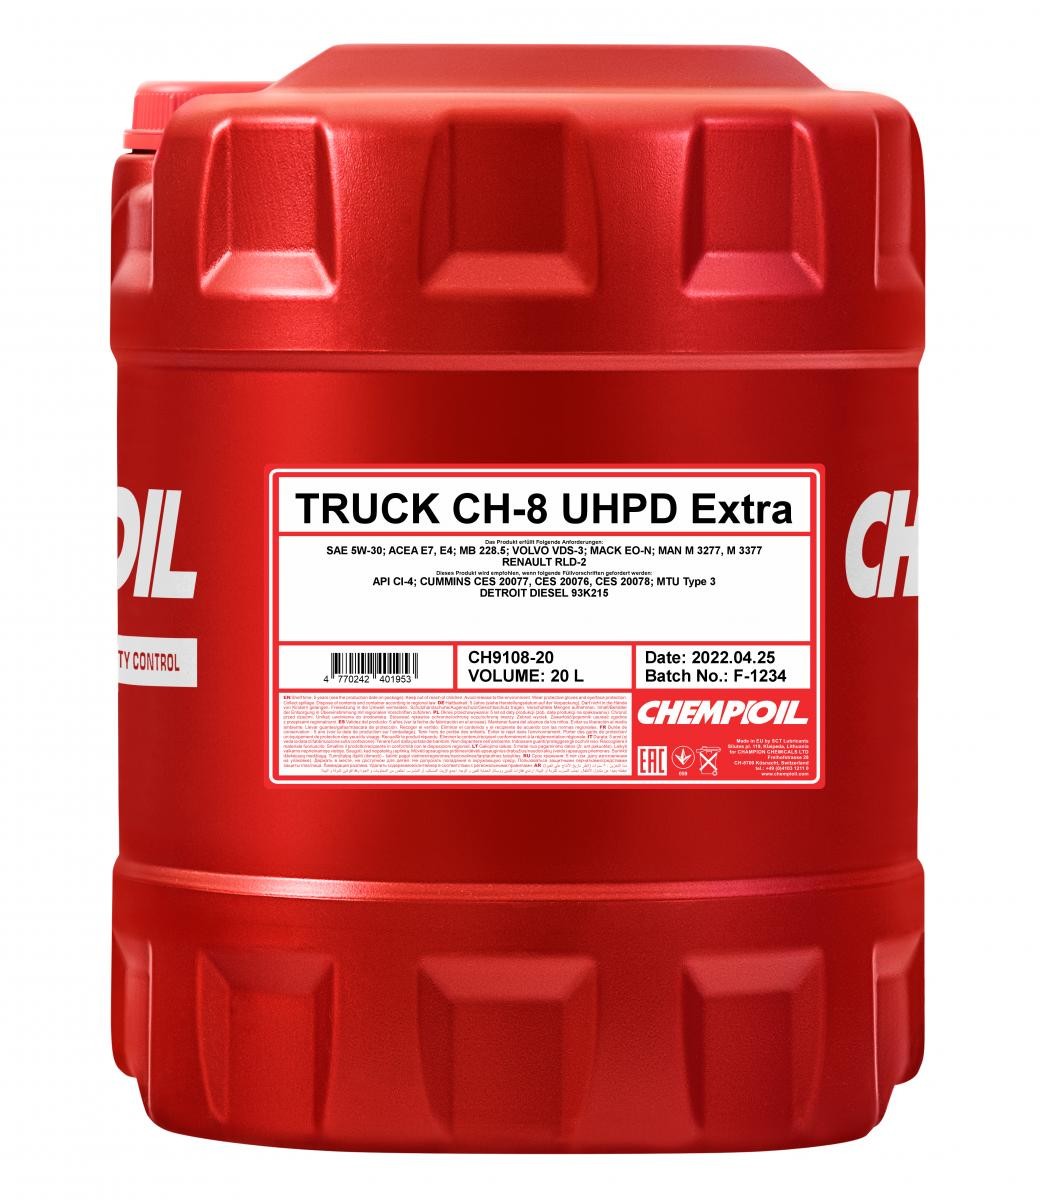 Car oil MB 228.5 CHEMPIOIL - CH9108-20 Truck, Extra CH-8